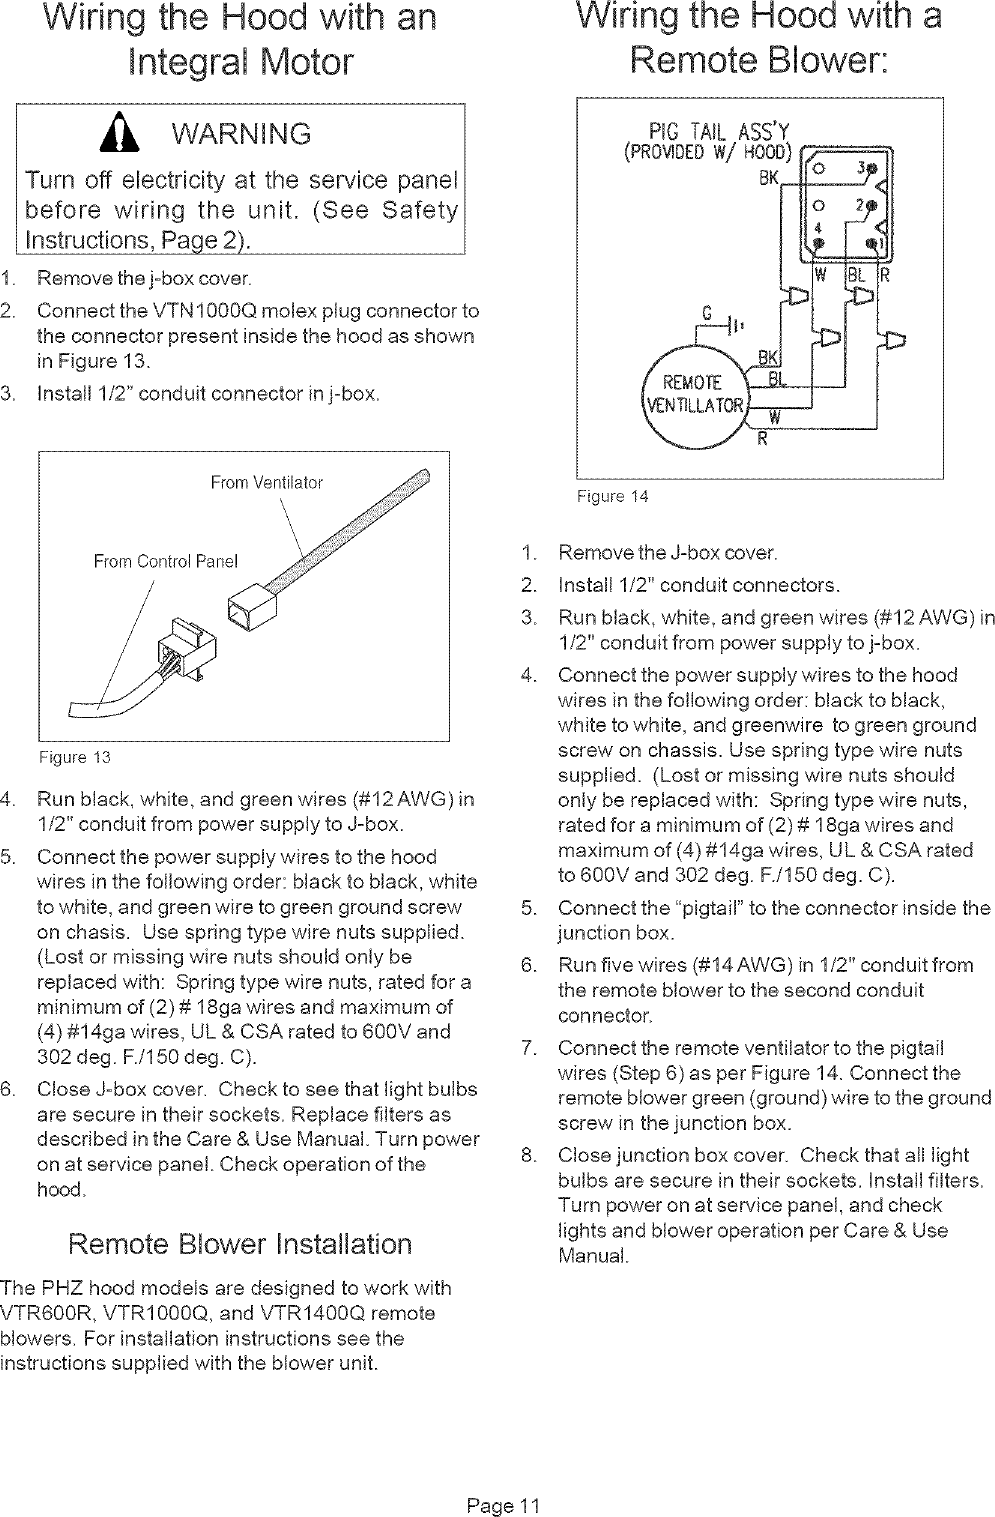 Page 11 of 12 - THERMADOR  Range Hood Manual L0512045